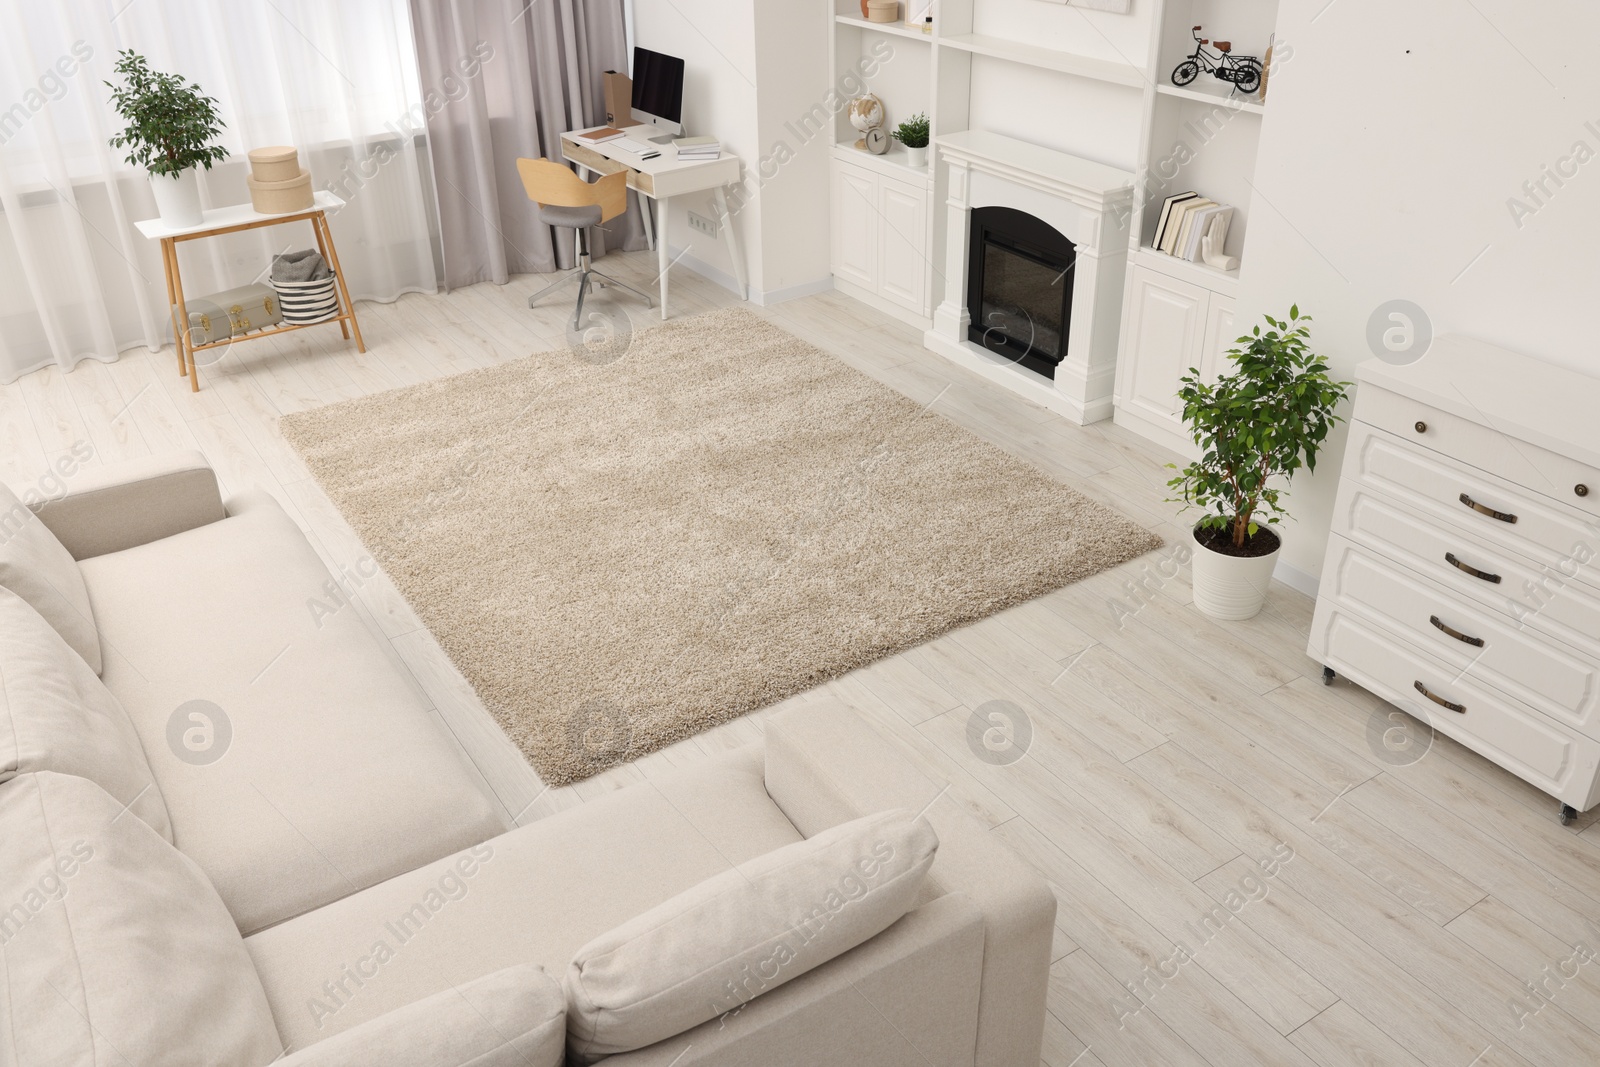 Photo of Stylish room with beautiful rug near fireplace. Interior design